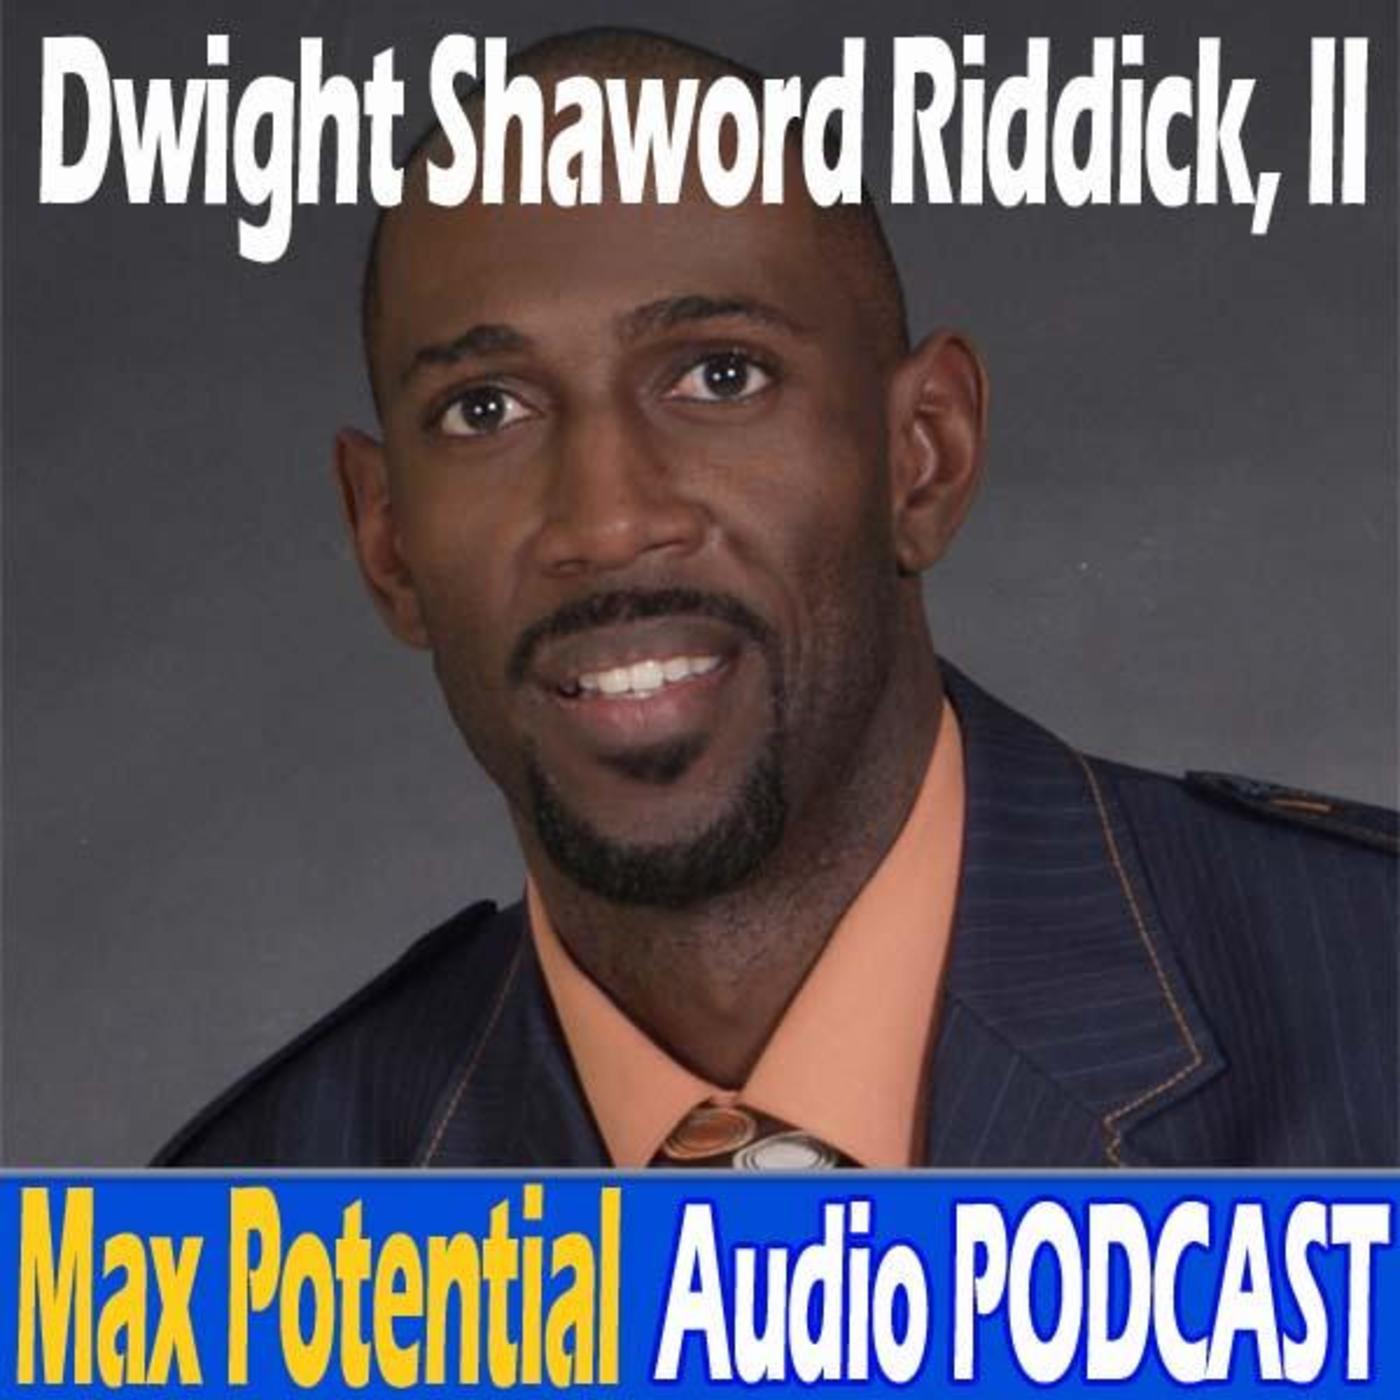 Dwight Shawrod Riddick (CMI Leadership)